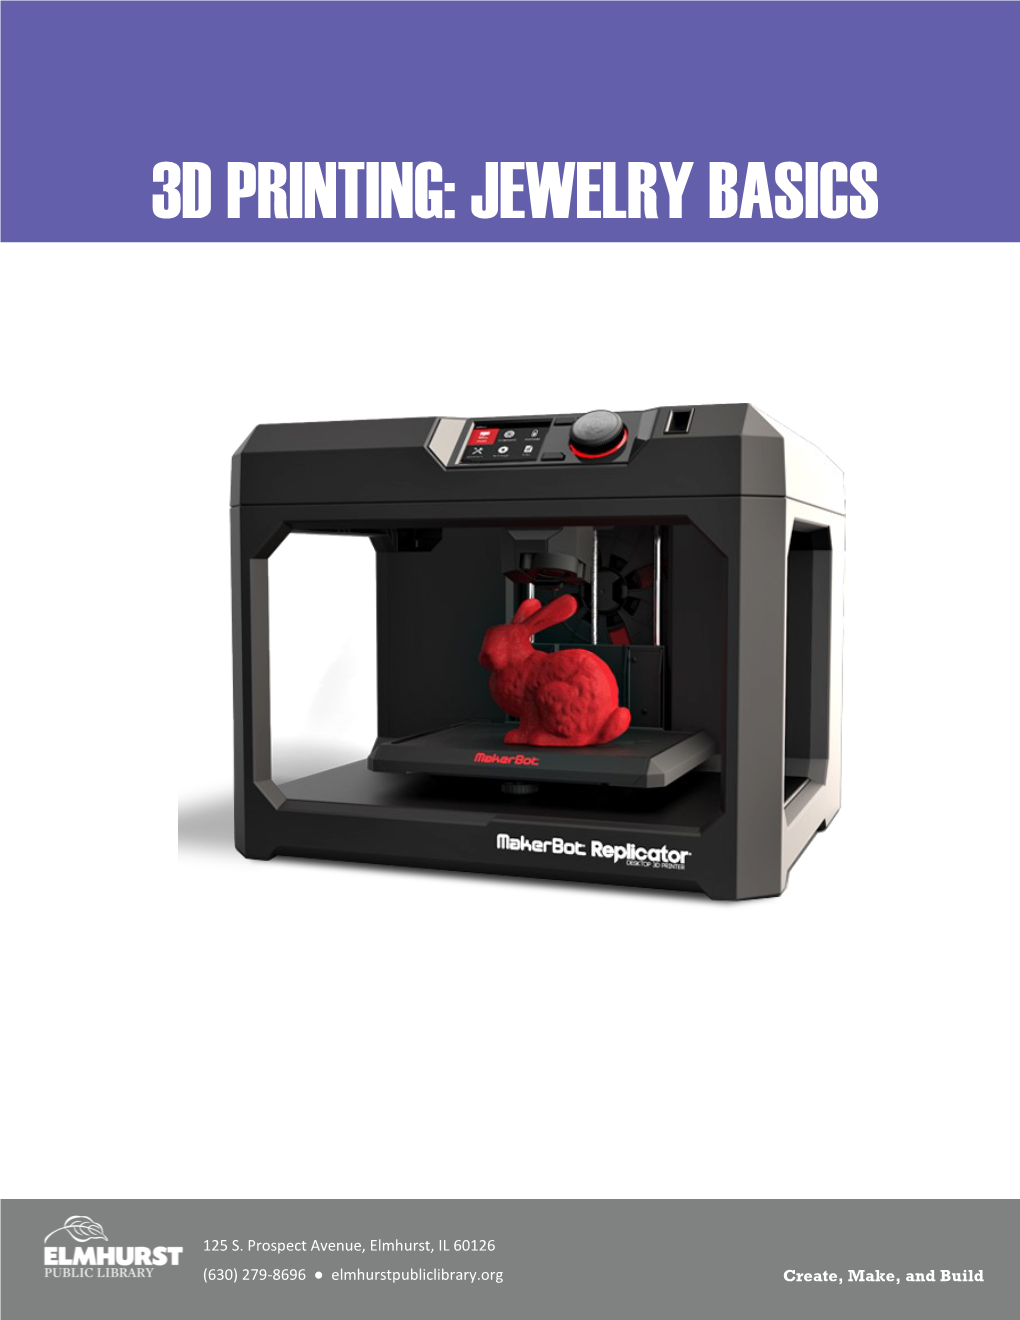 3D Printing: Jewelry Basics